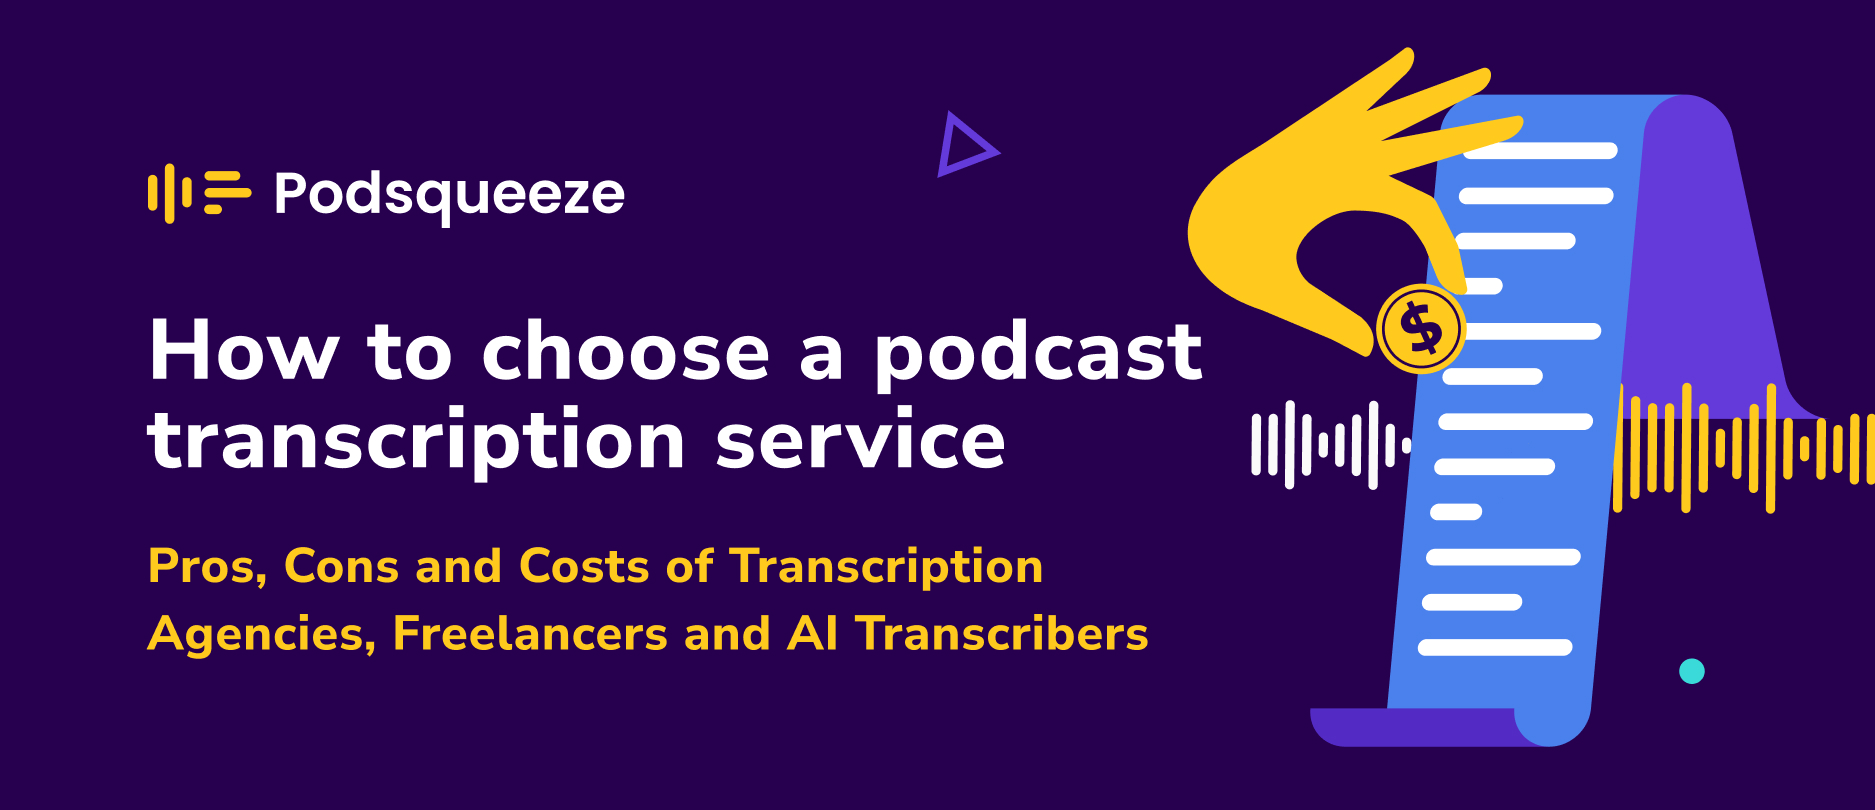 podcast transcription services blog article cover